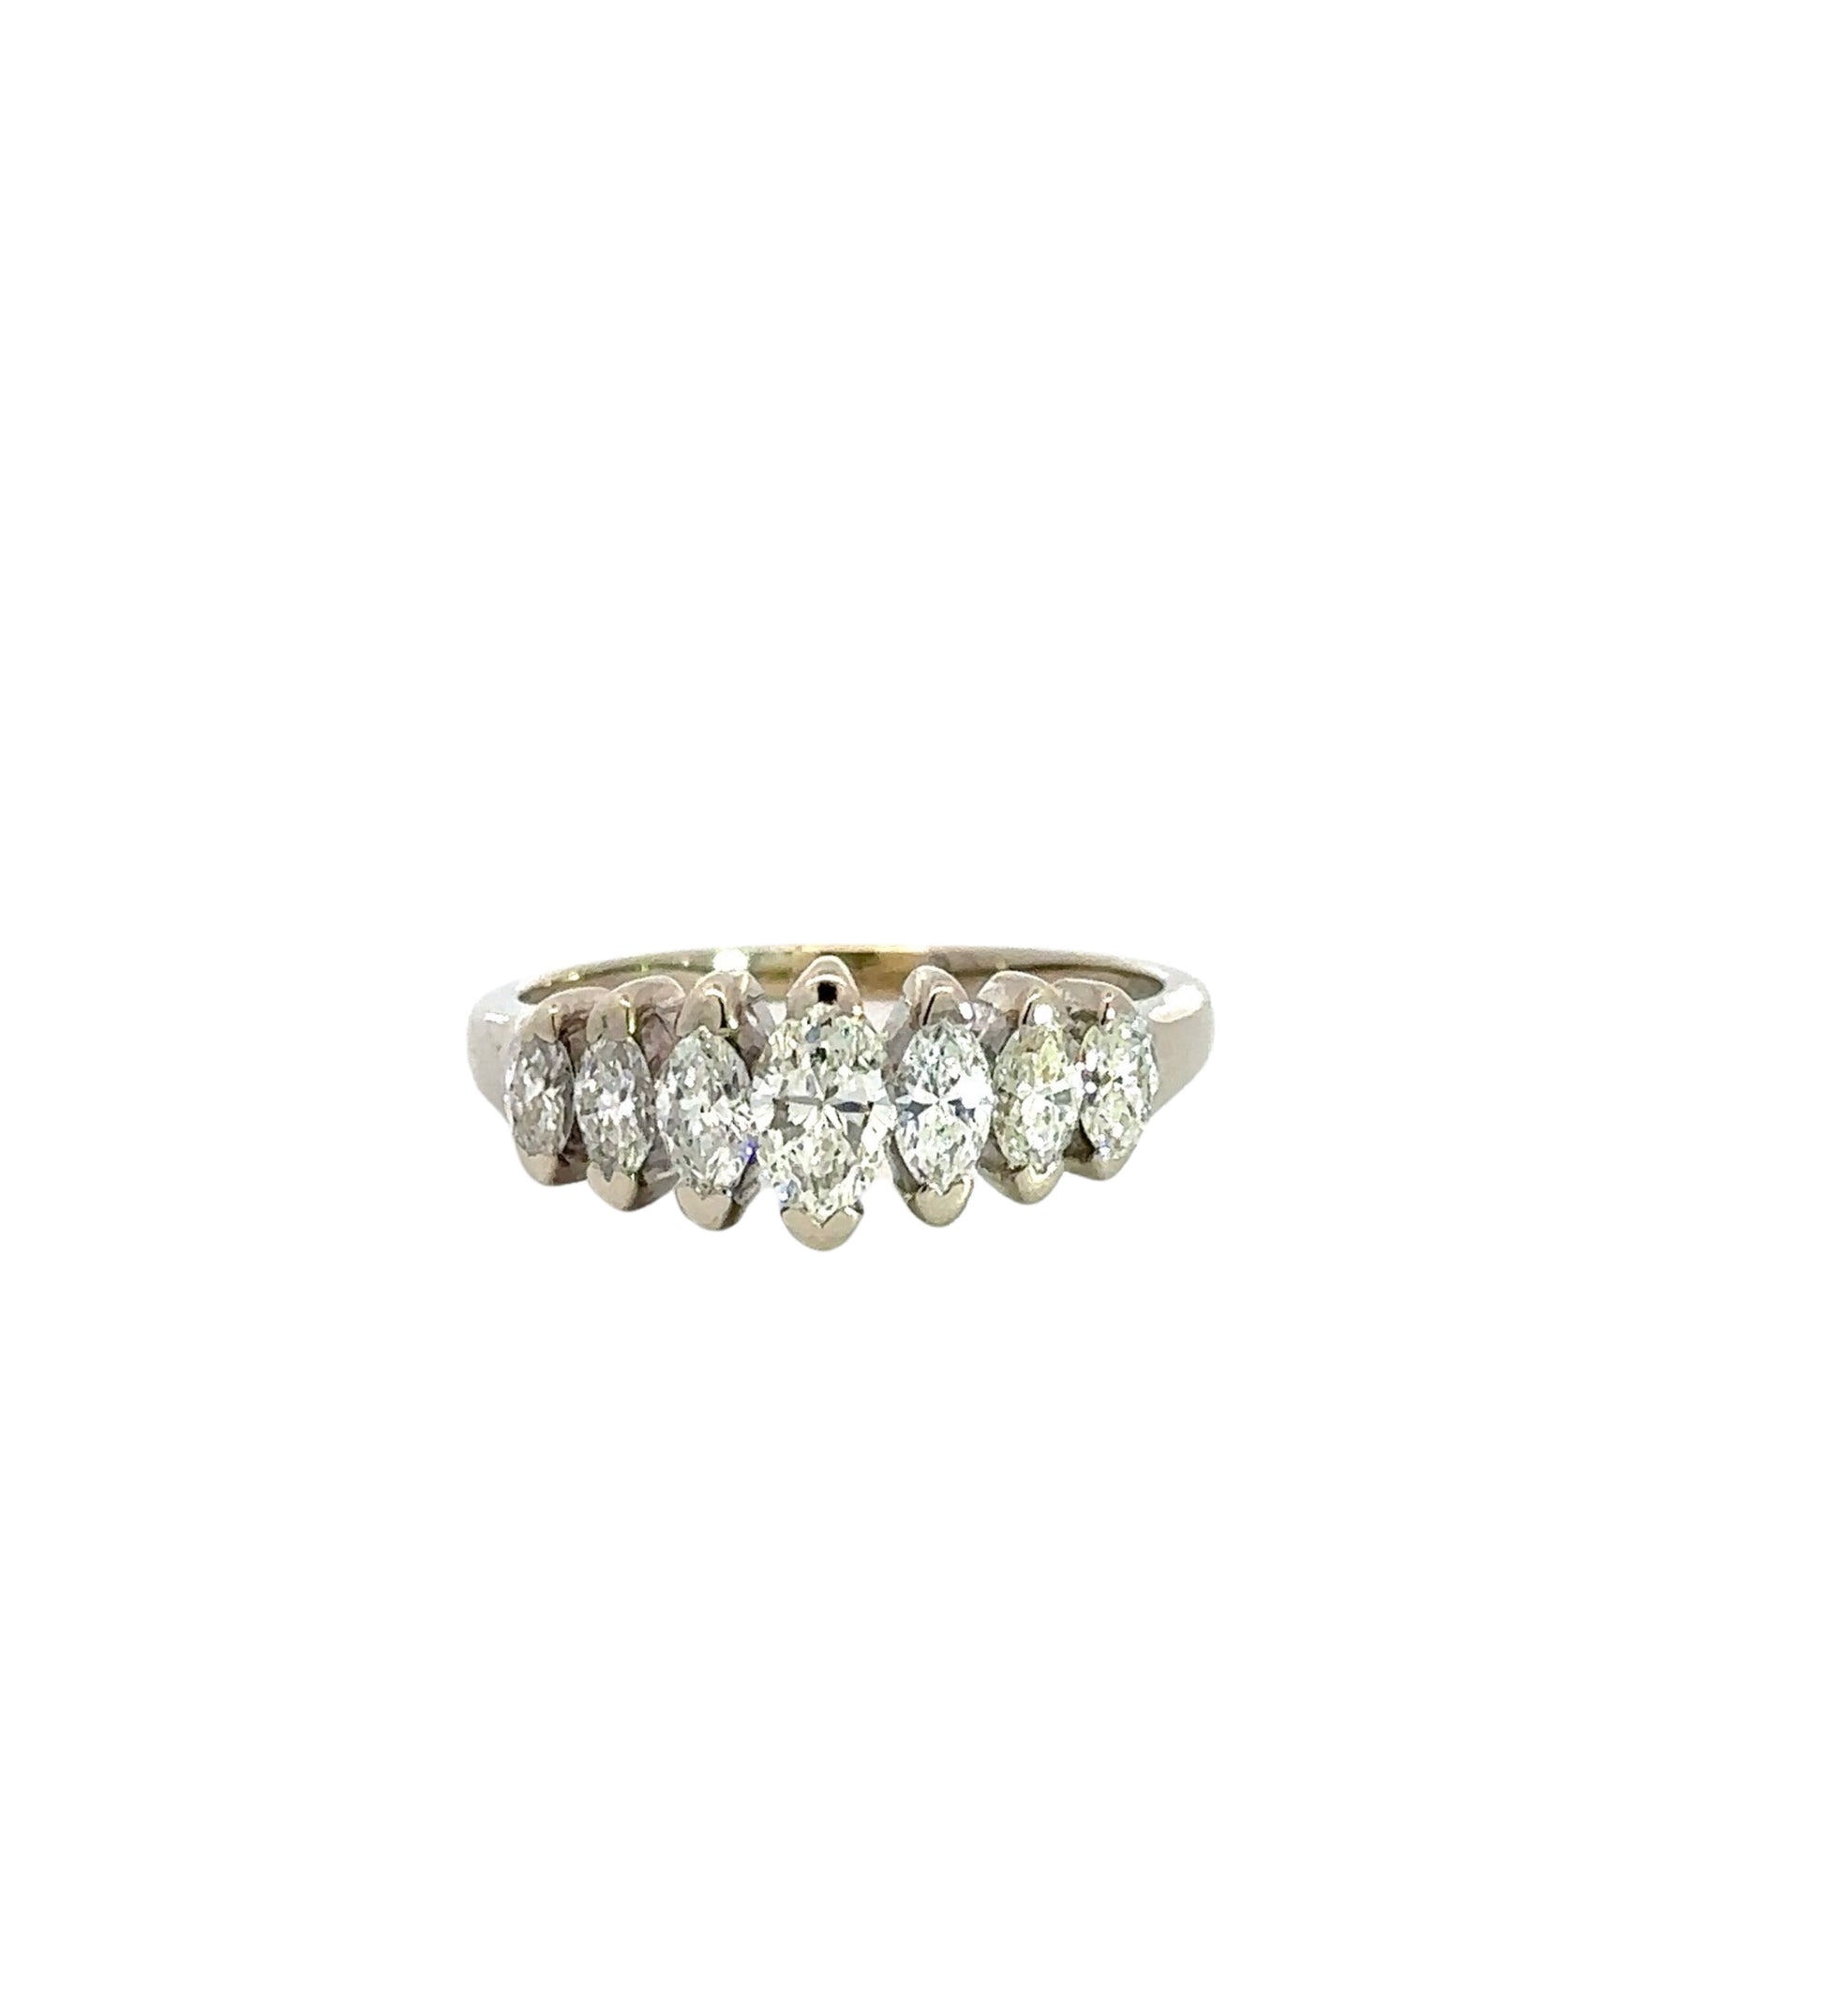 White gold diamond ring with 7 oval diamonds